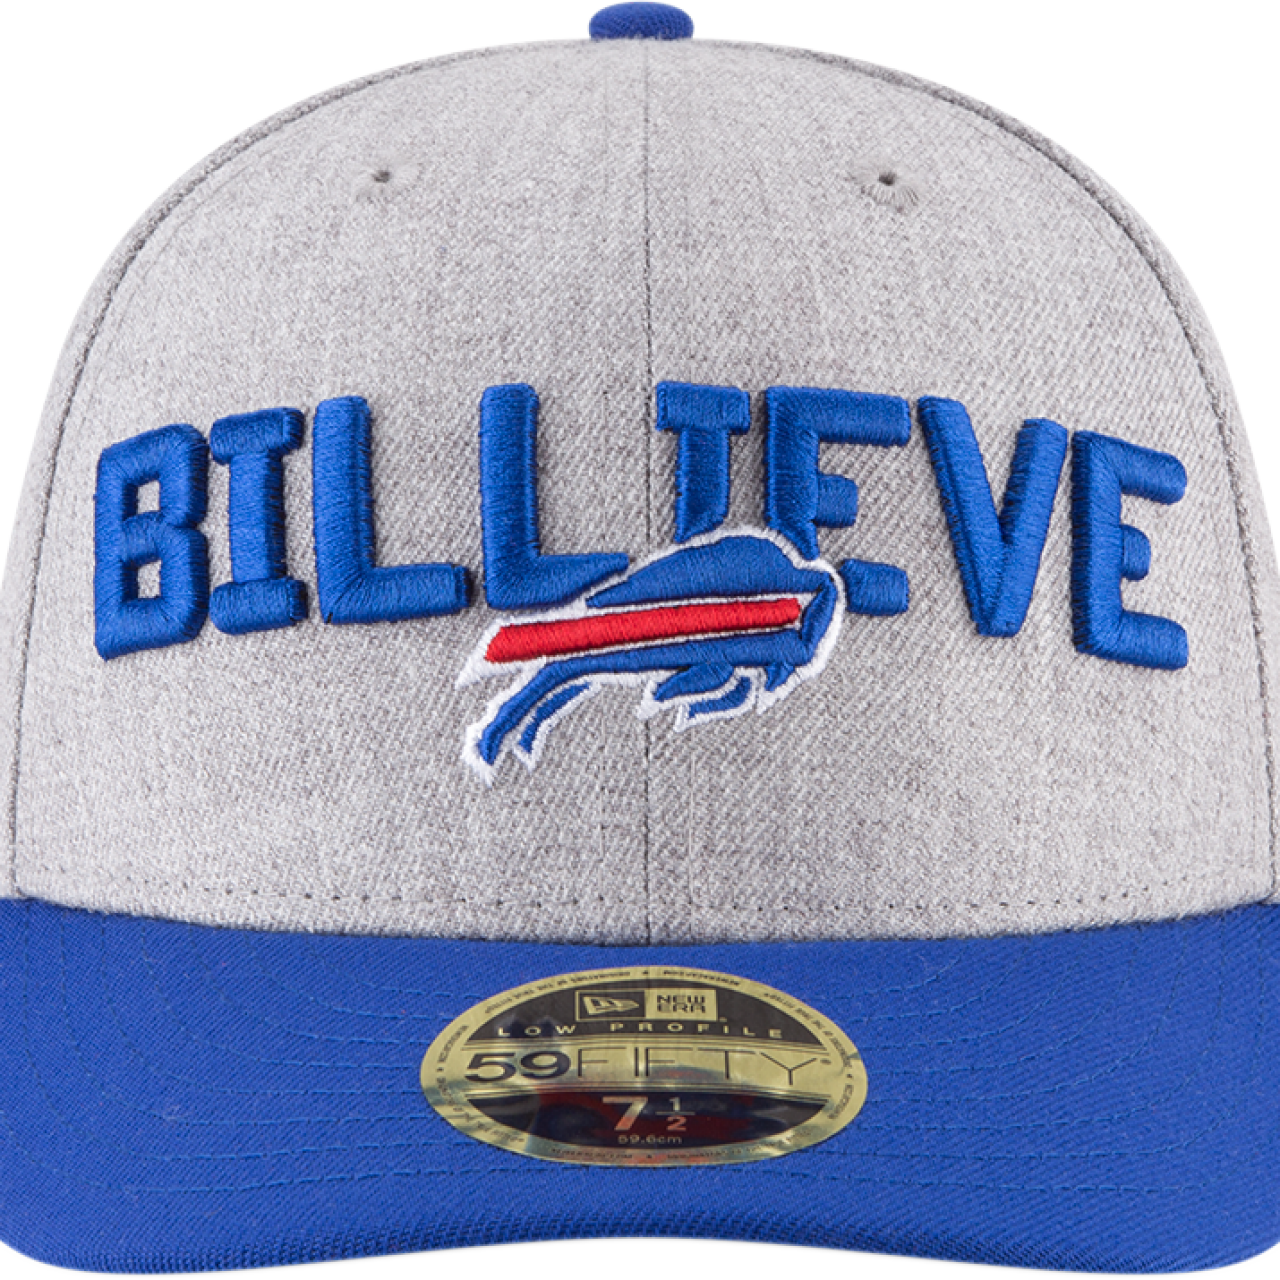 buffalo bills draft hat